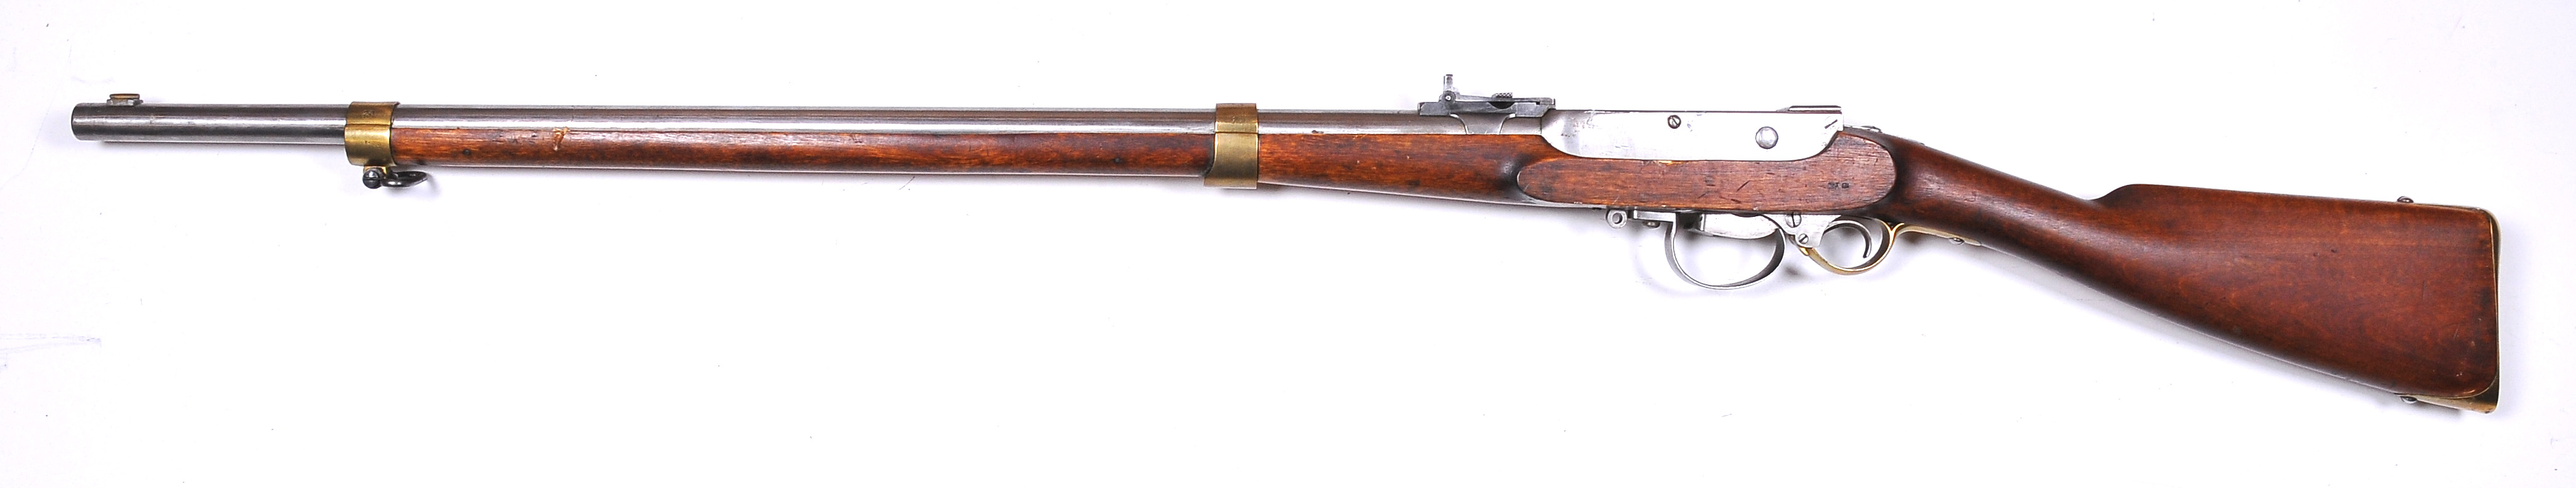 ./guns/rifle/bilder/Rifle-Kongsberg-Kammerlader-1859-2band-20A-2.jpg